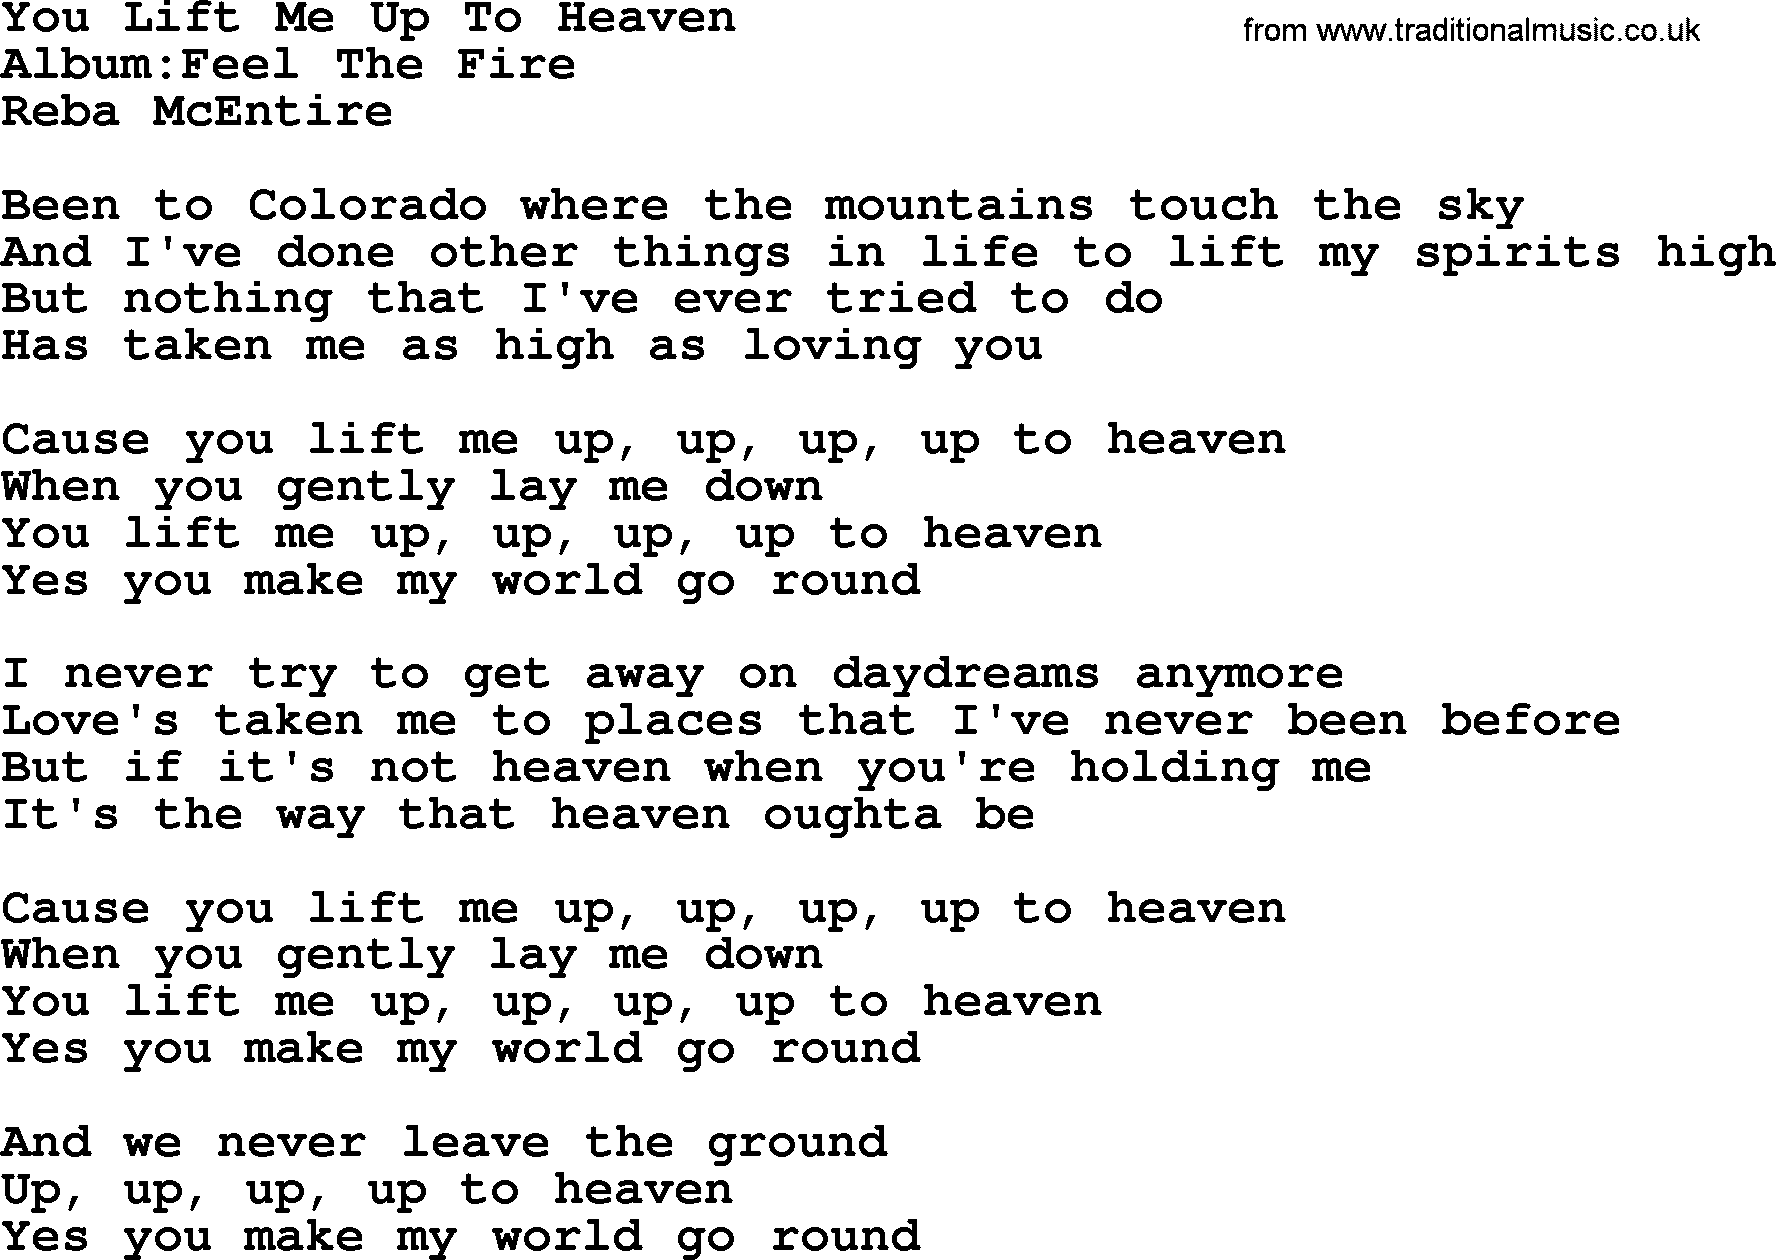 Reba McEntire song: You Lift Me Up To Heaven lyrics